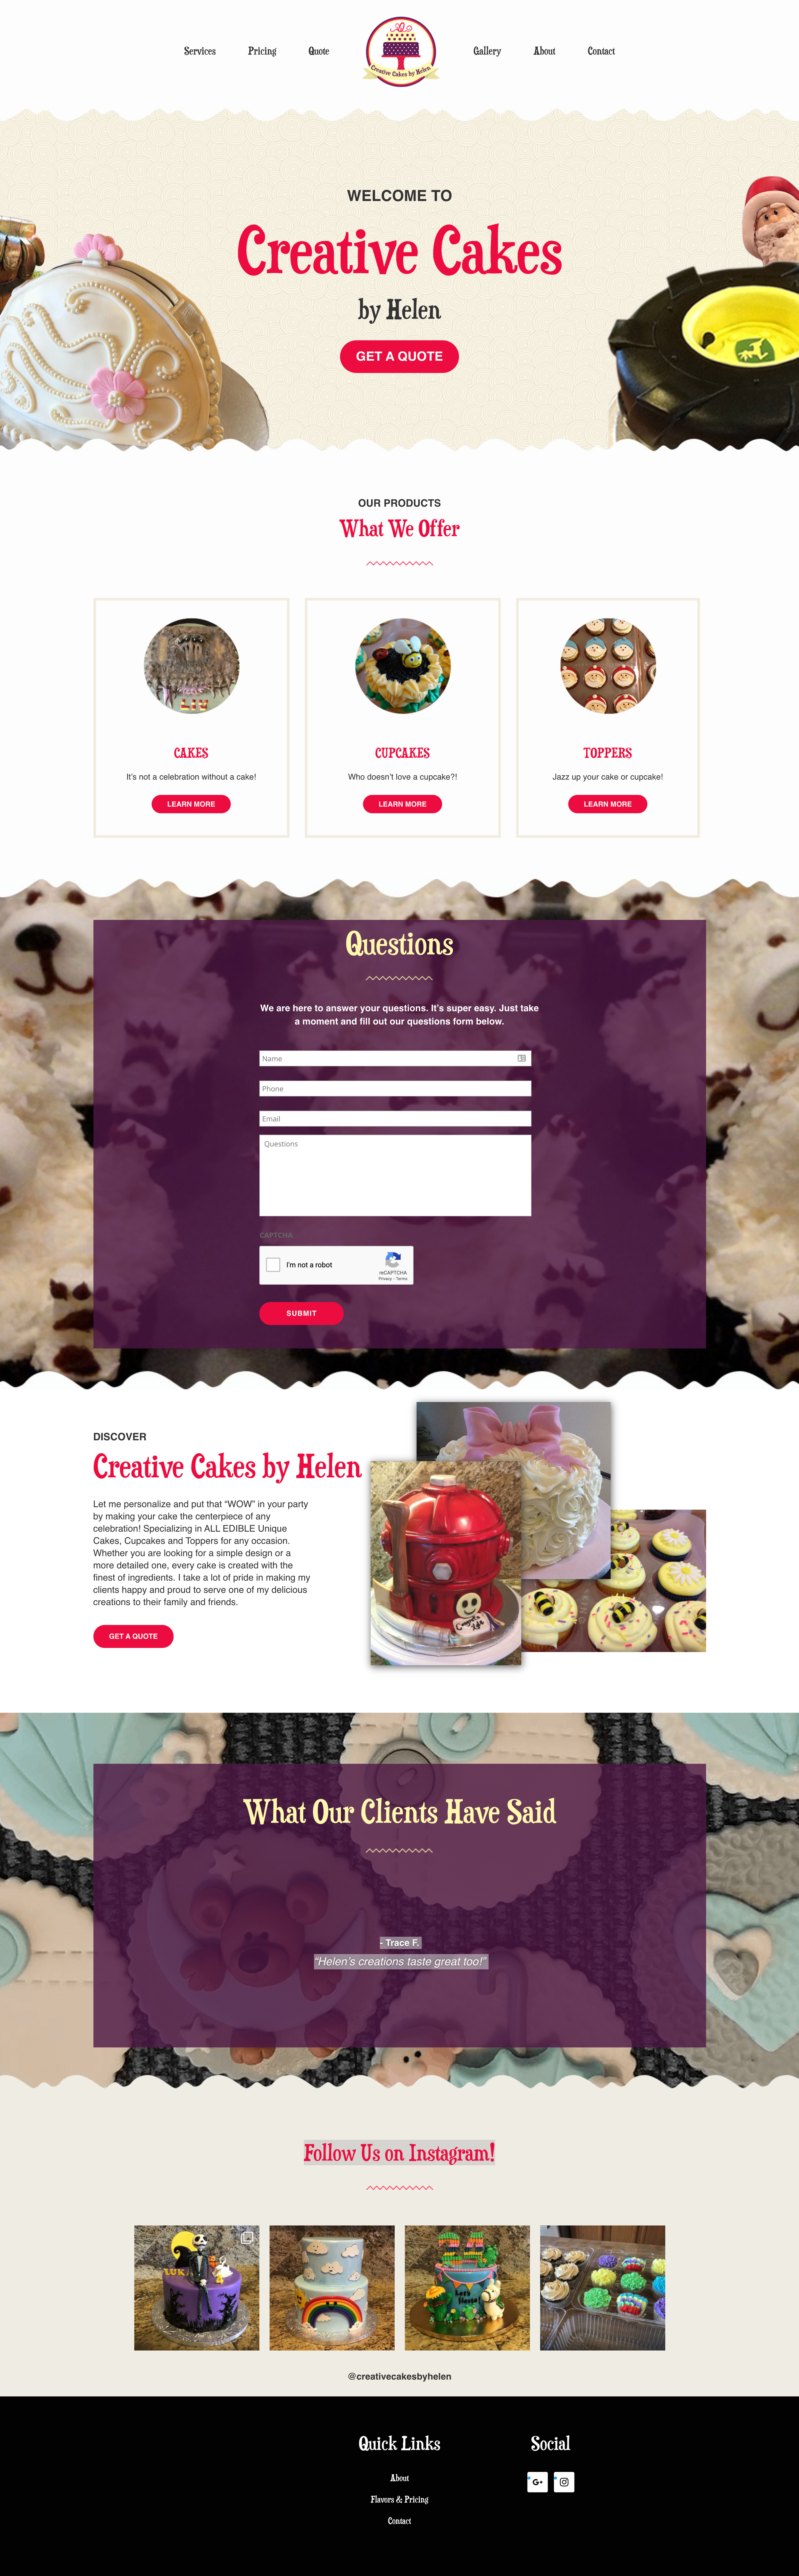 Creative Cakes By Helen Website Design